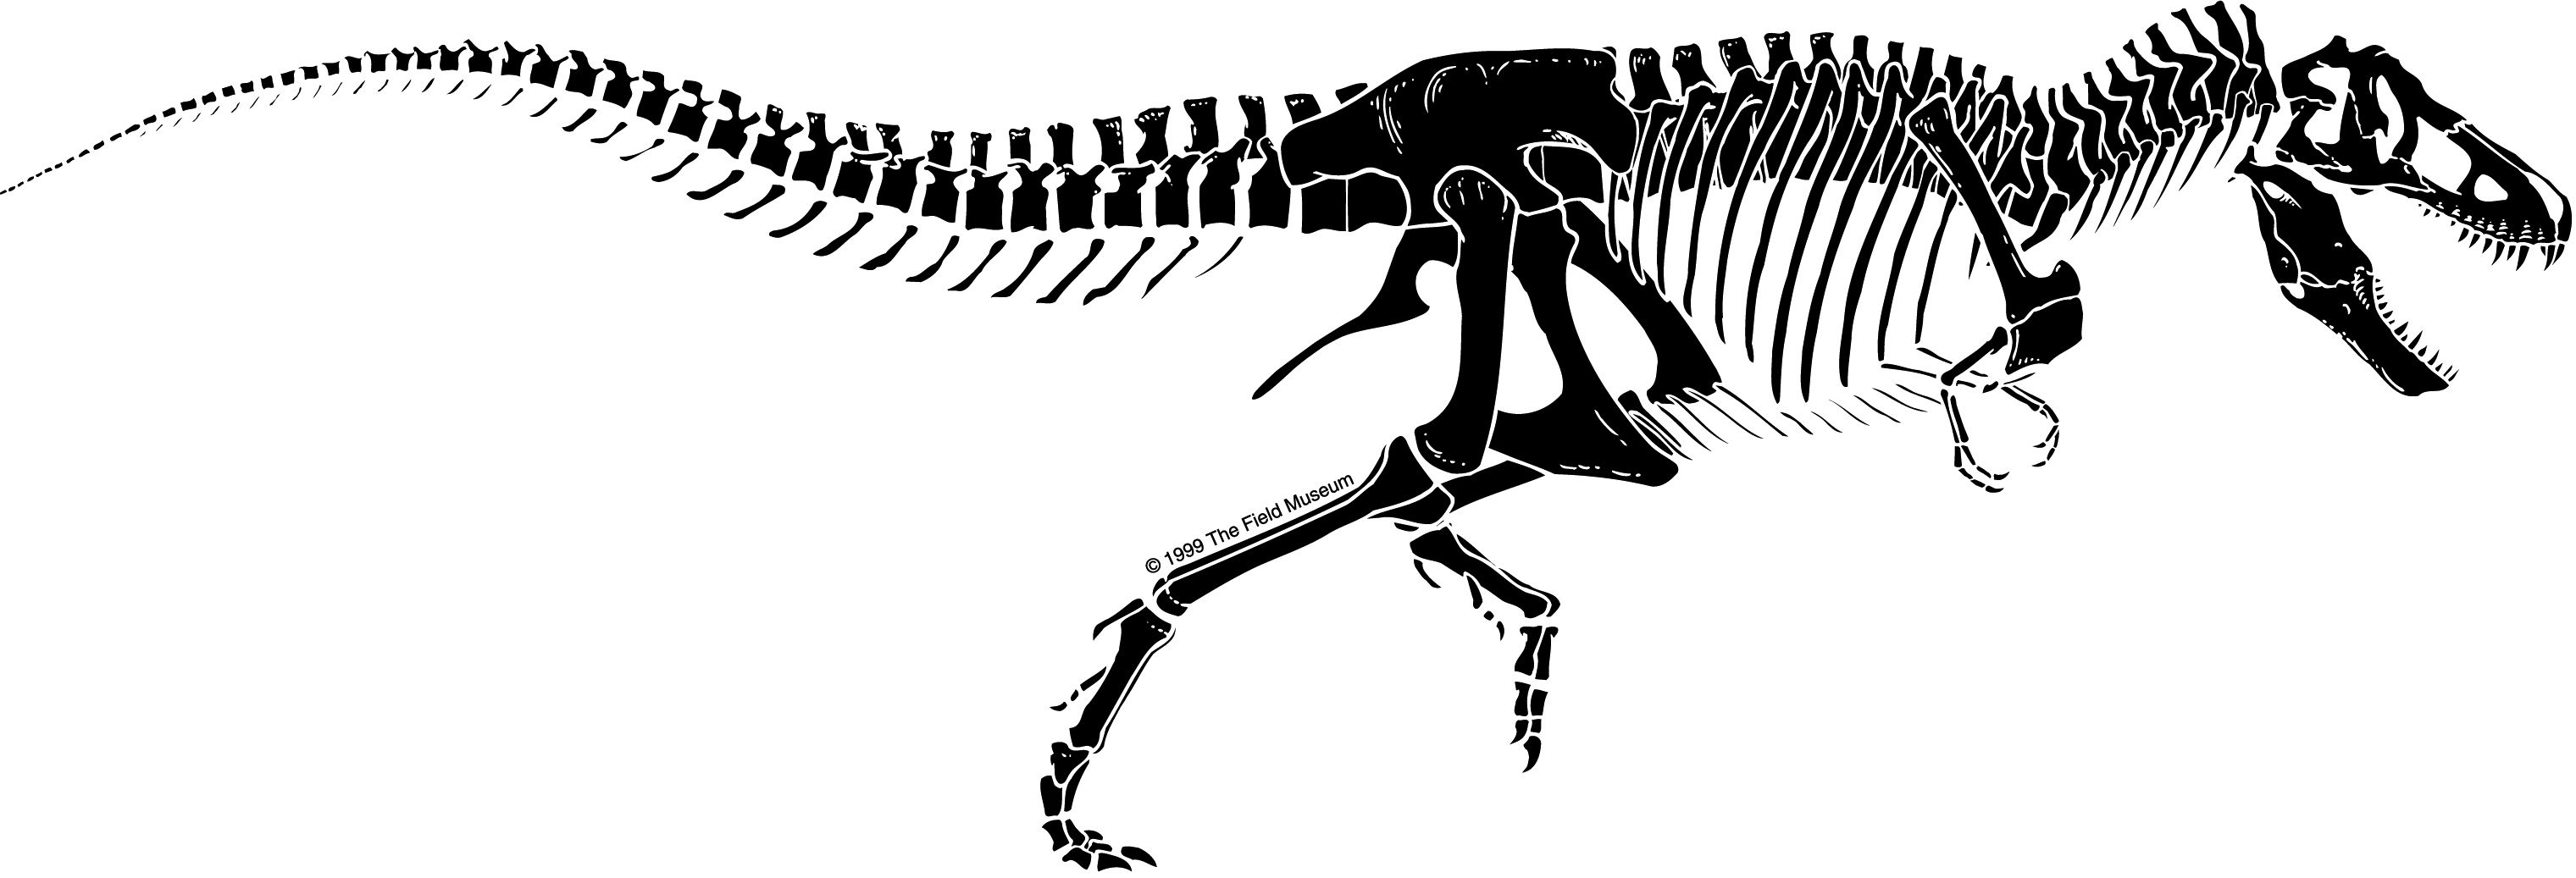 Tyrannosaurus Rex Skeleton Drawing at Explore